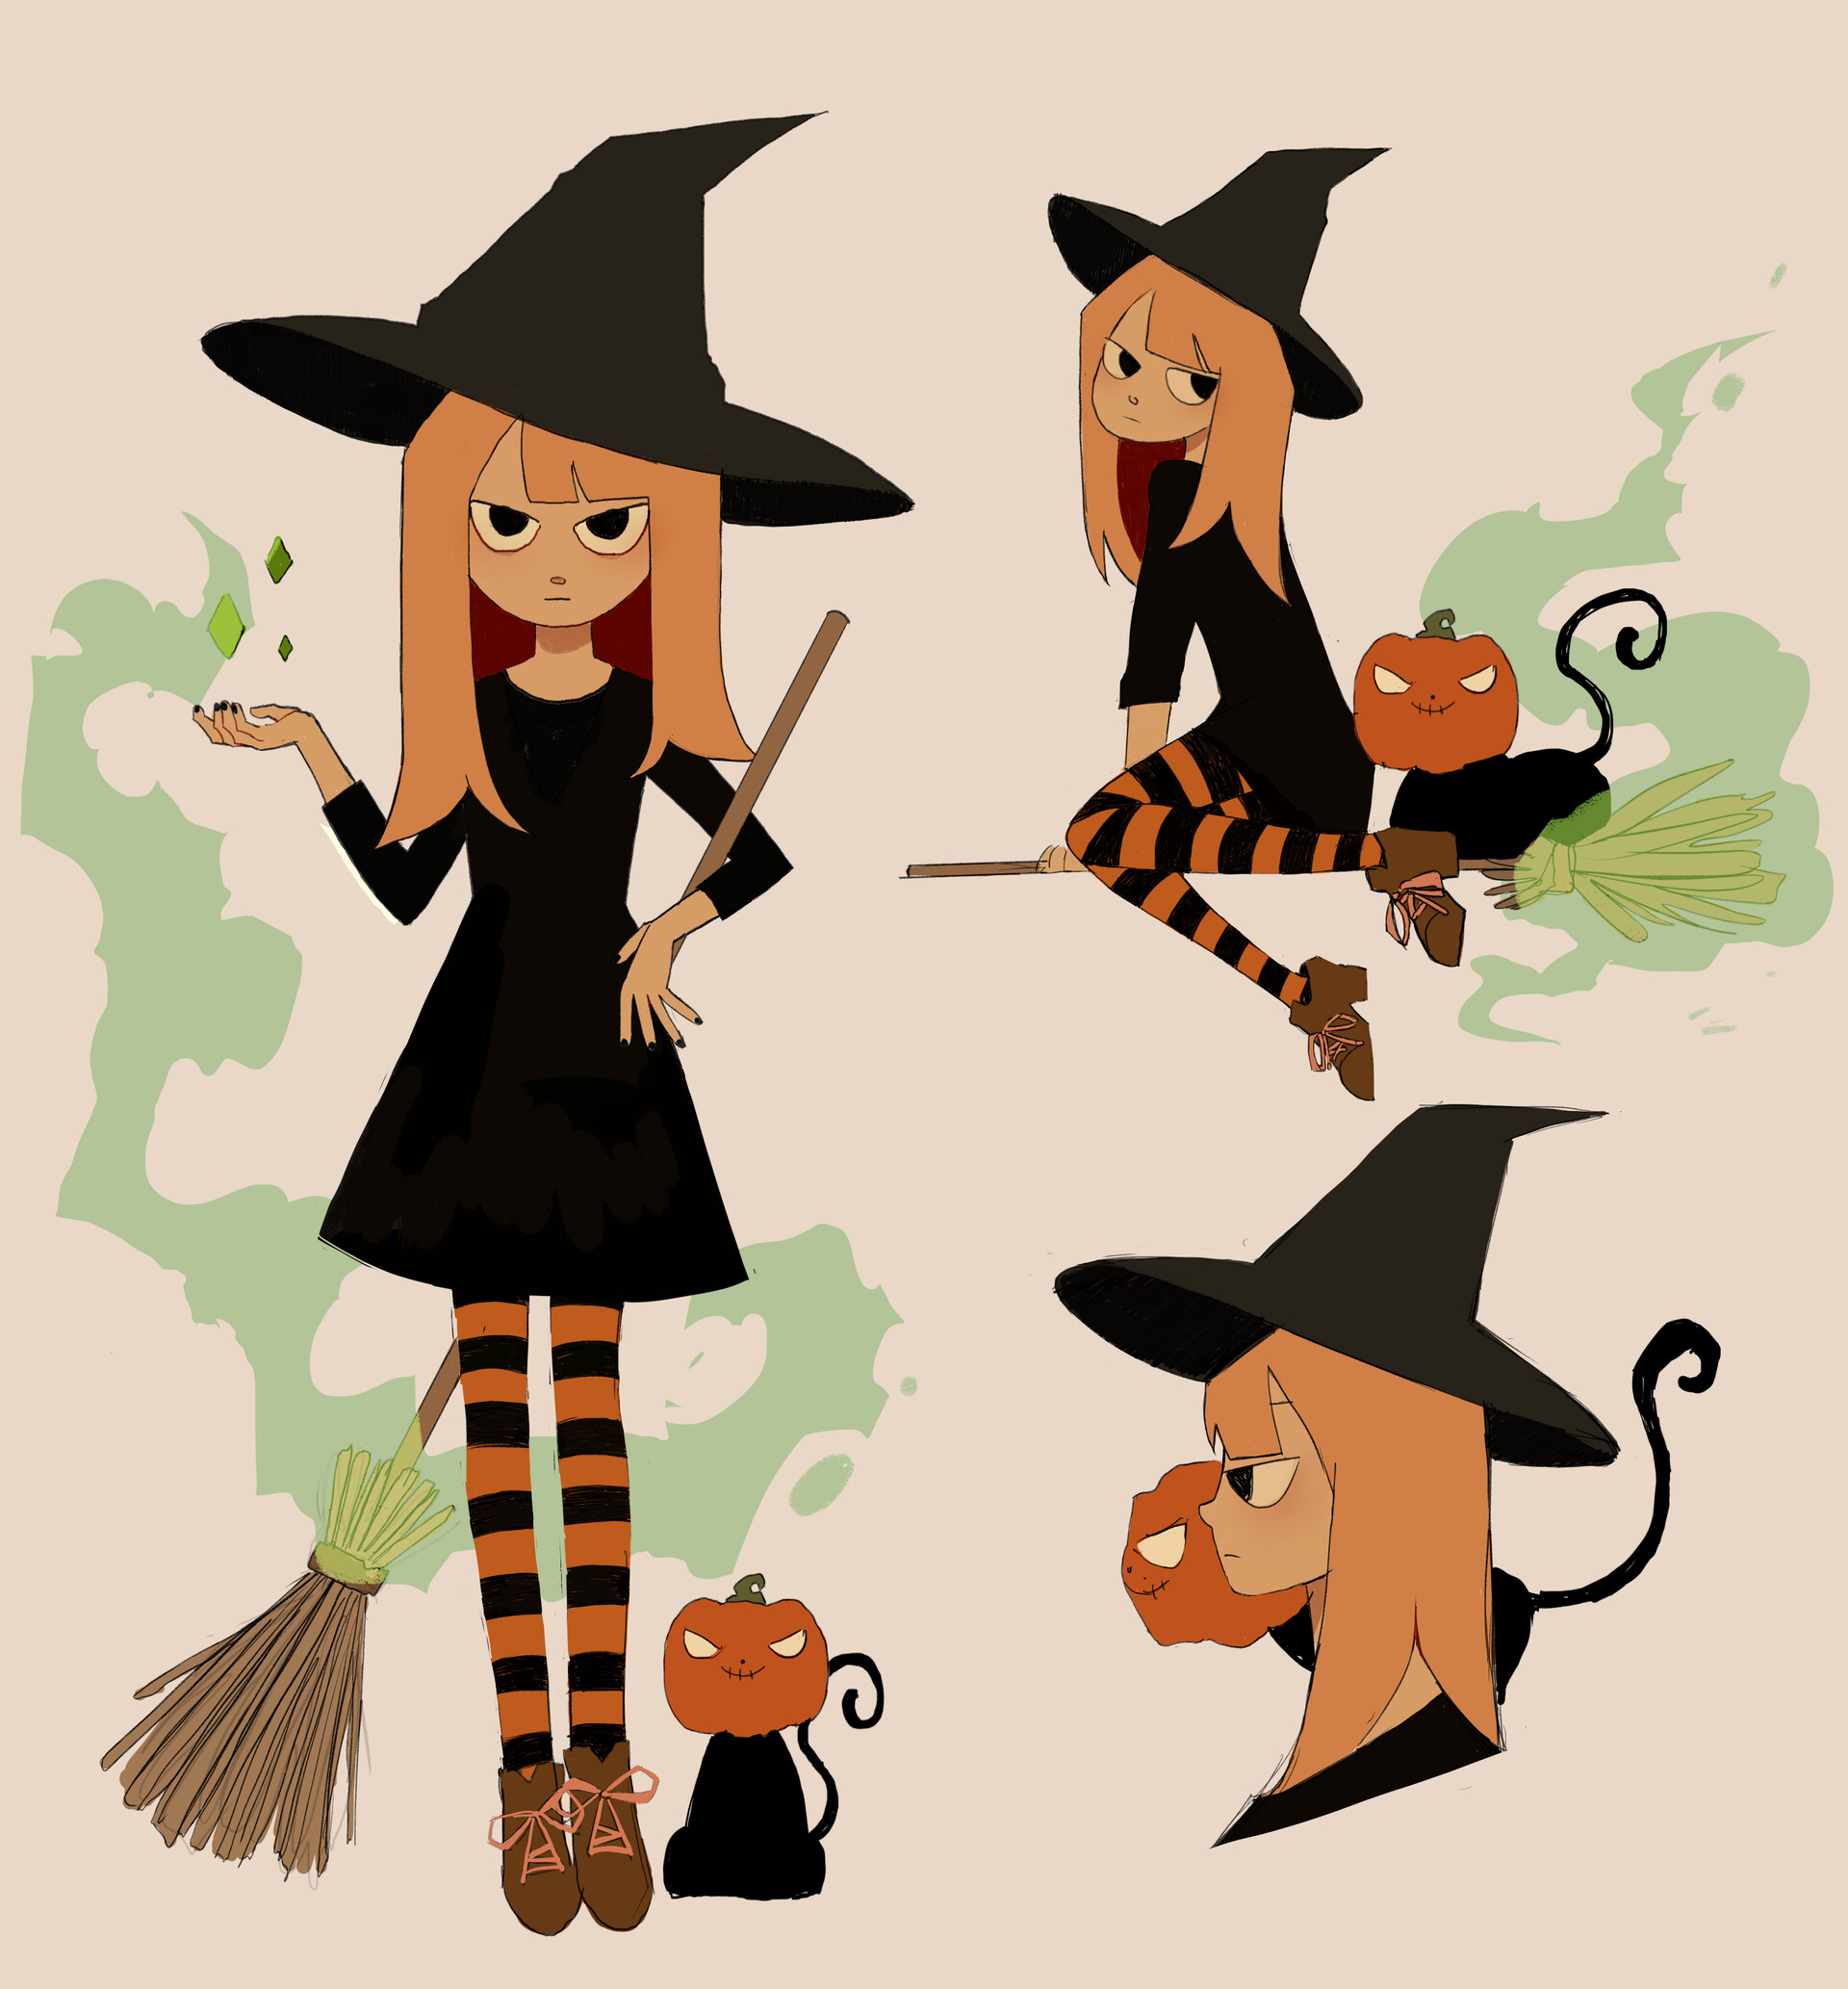 ArtStation - Witchy girl - University Halloween contest